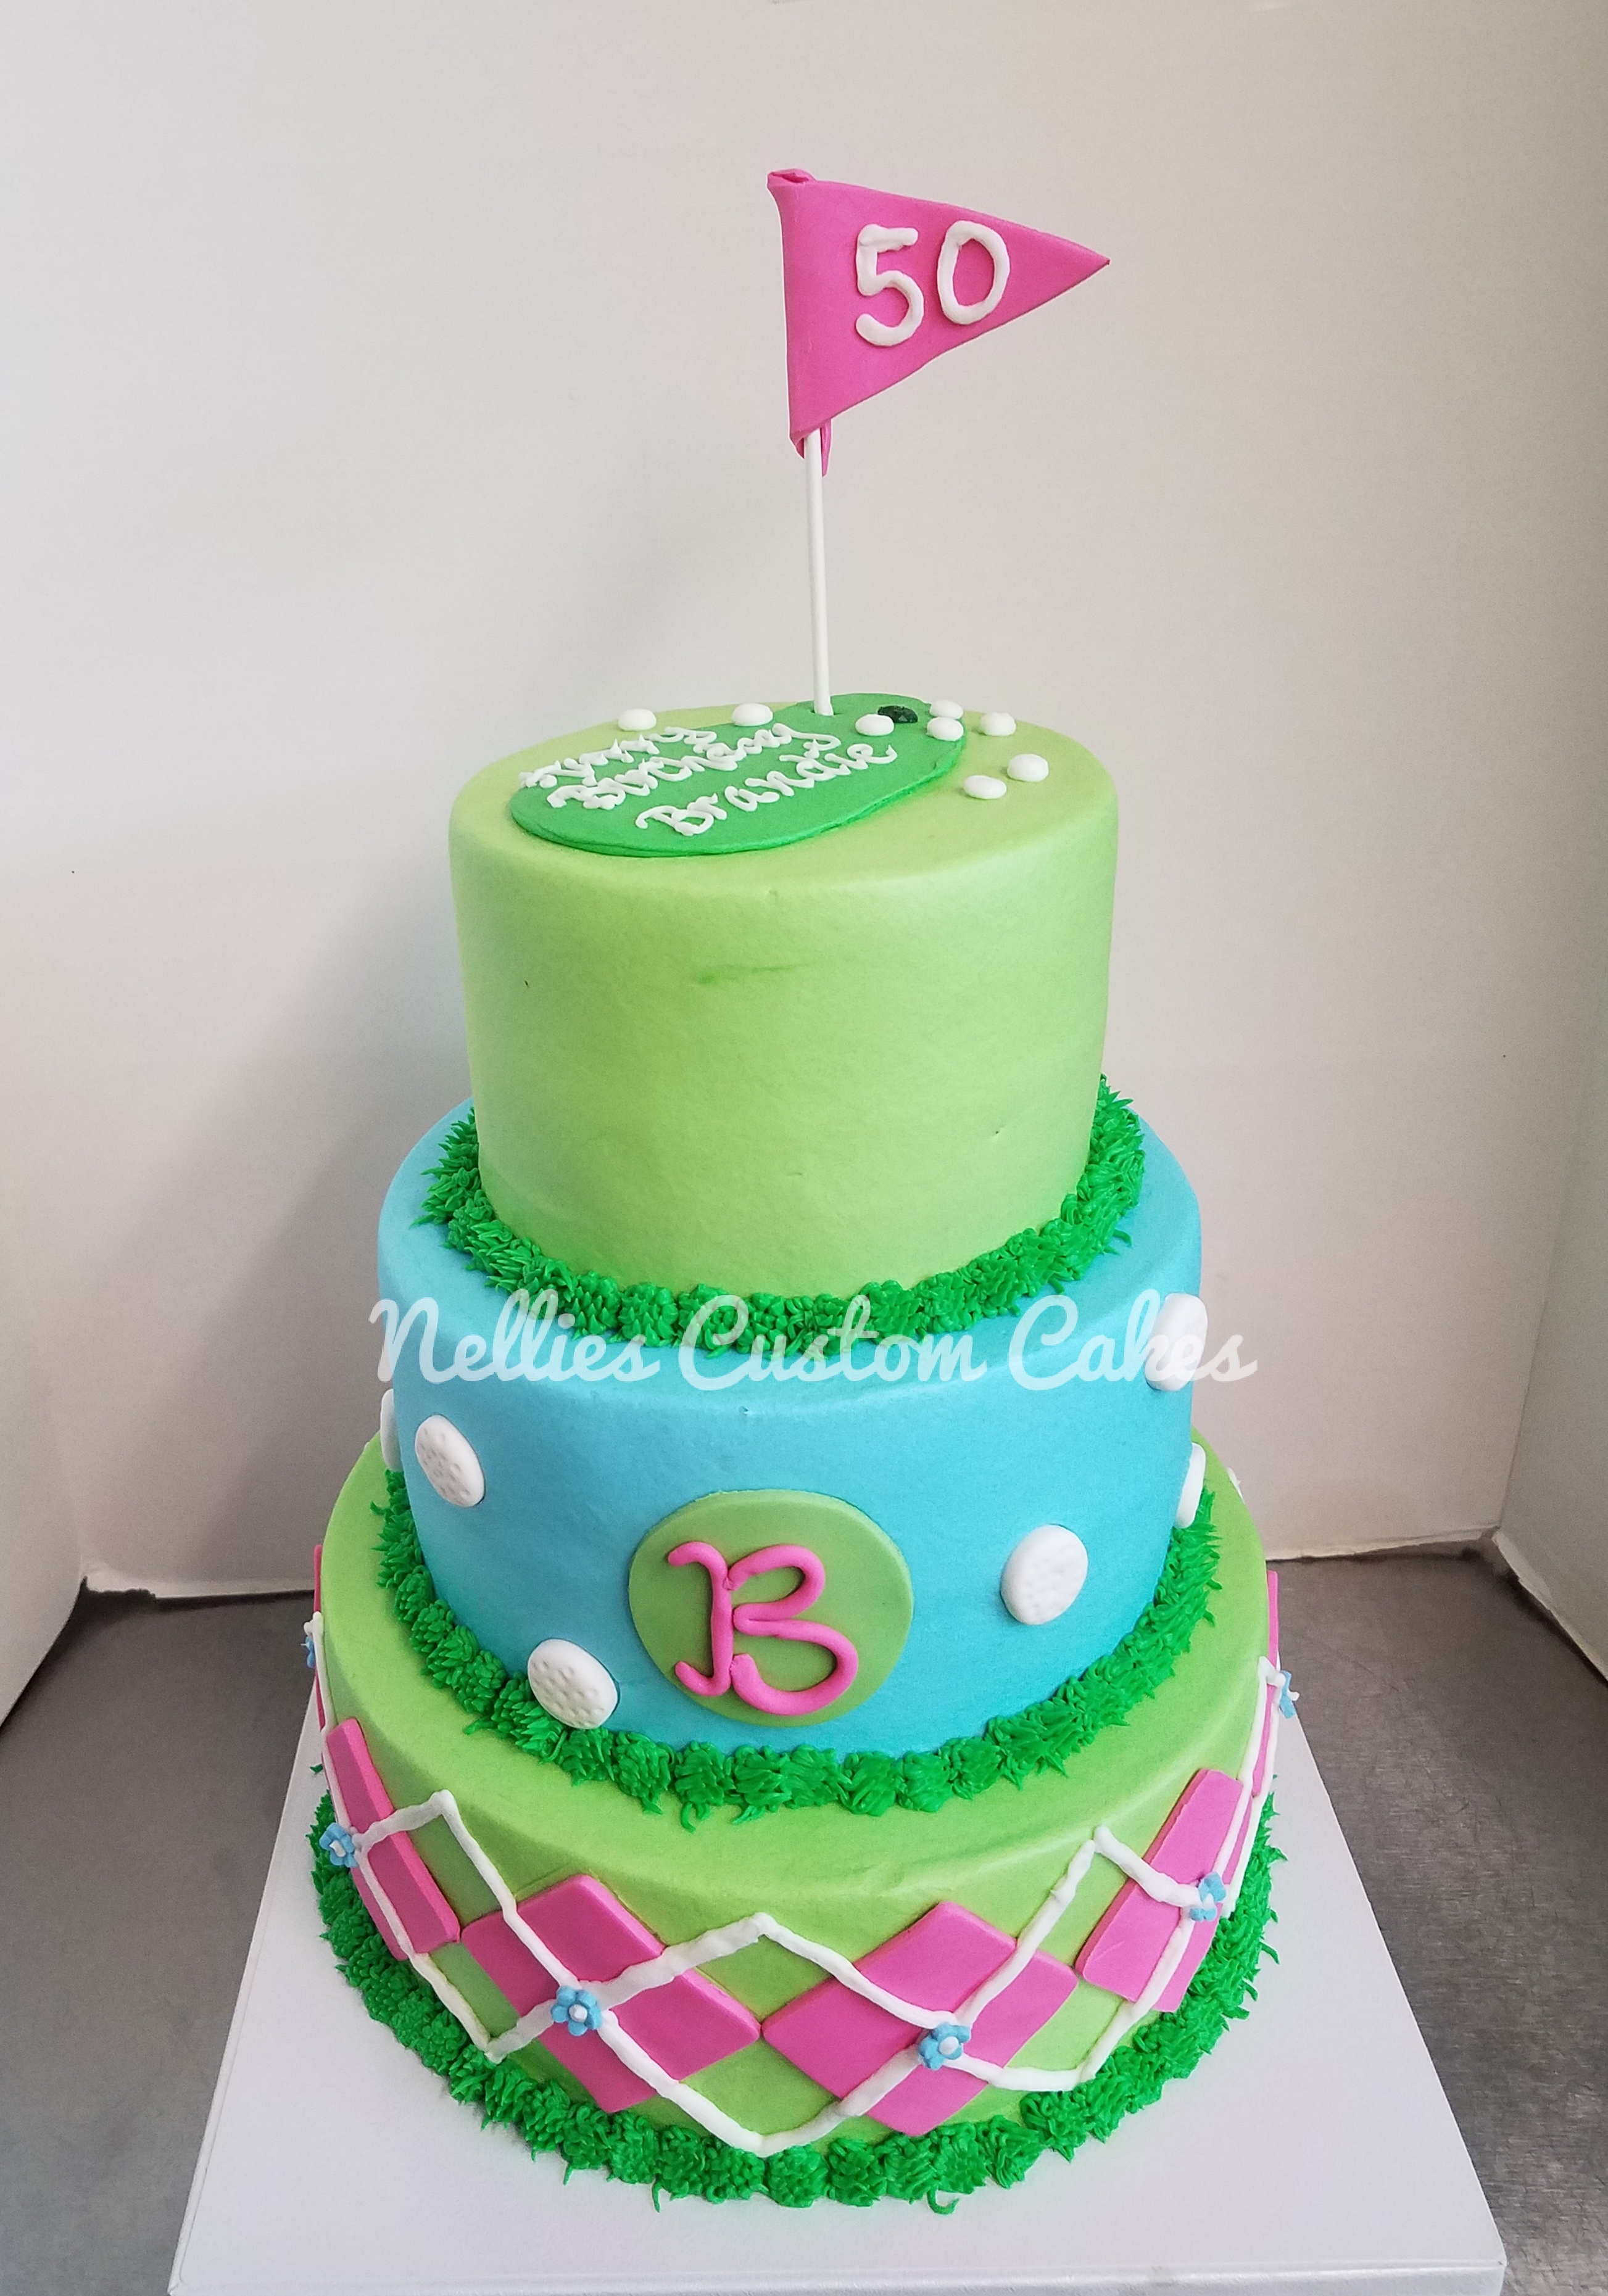 Golf tiered buttercream cake - Nellie's Custom Cakes, Kansas City